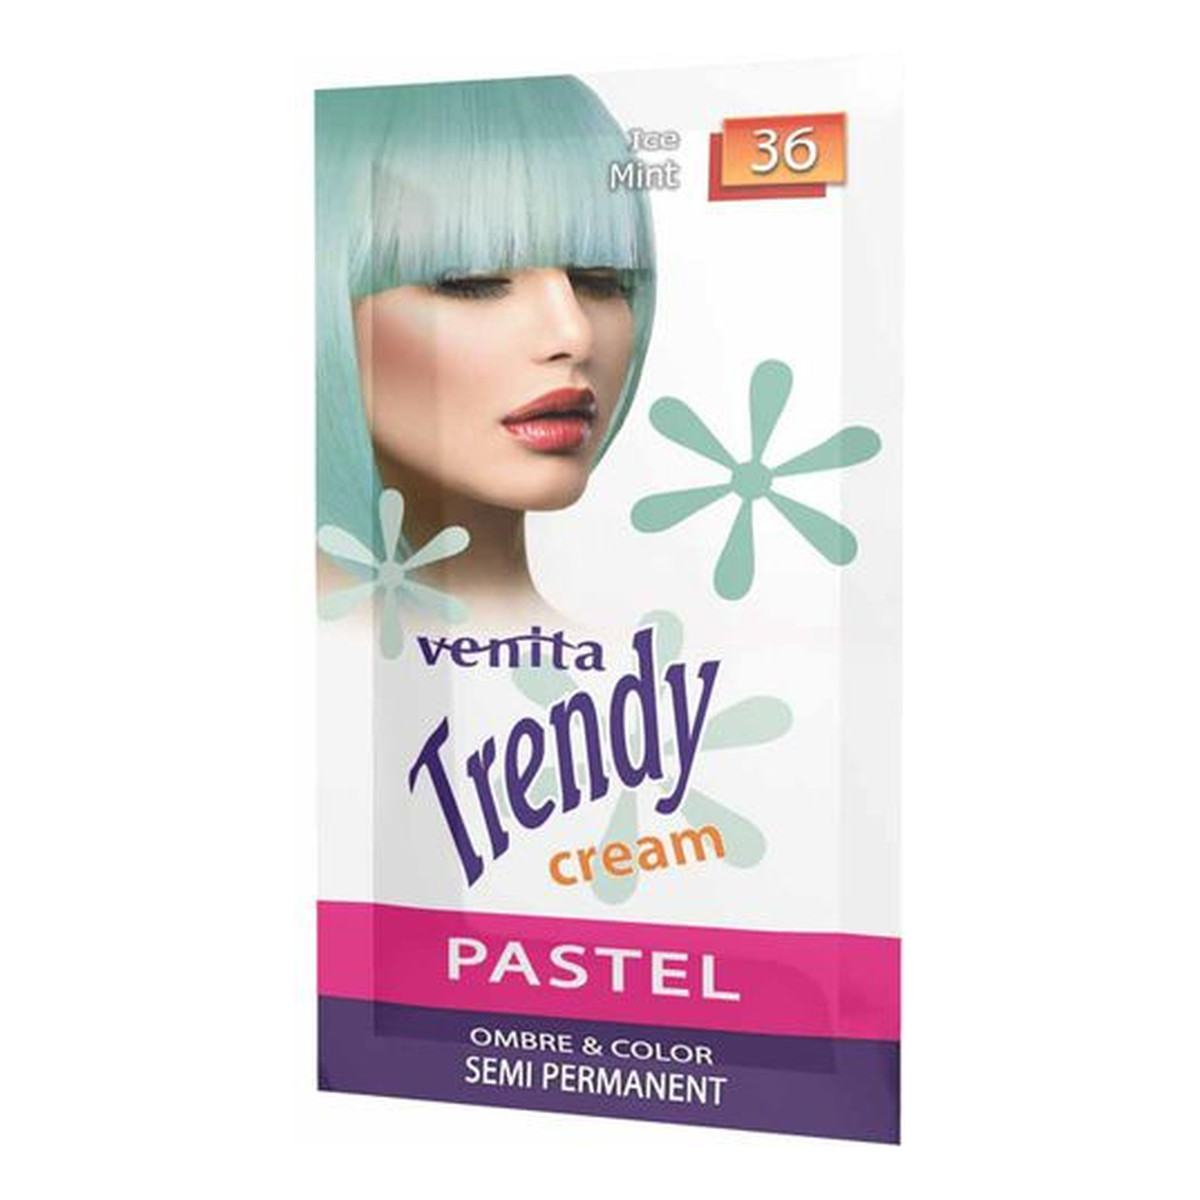 Venita Trendy Cream Ultra Krem koloryzujący 35g